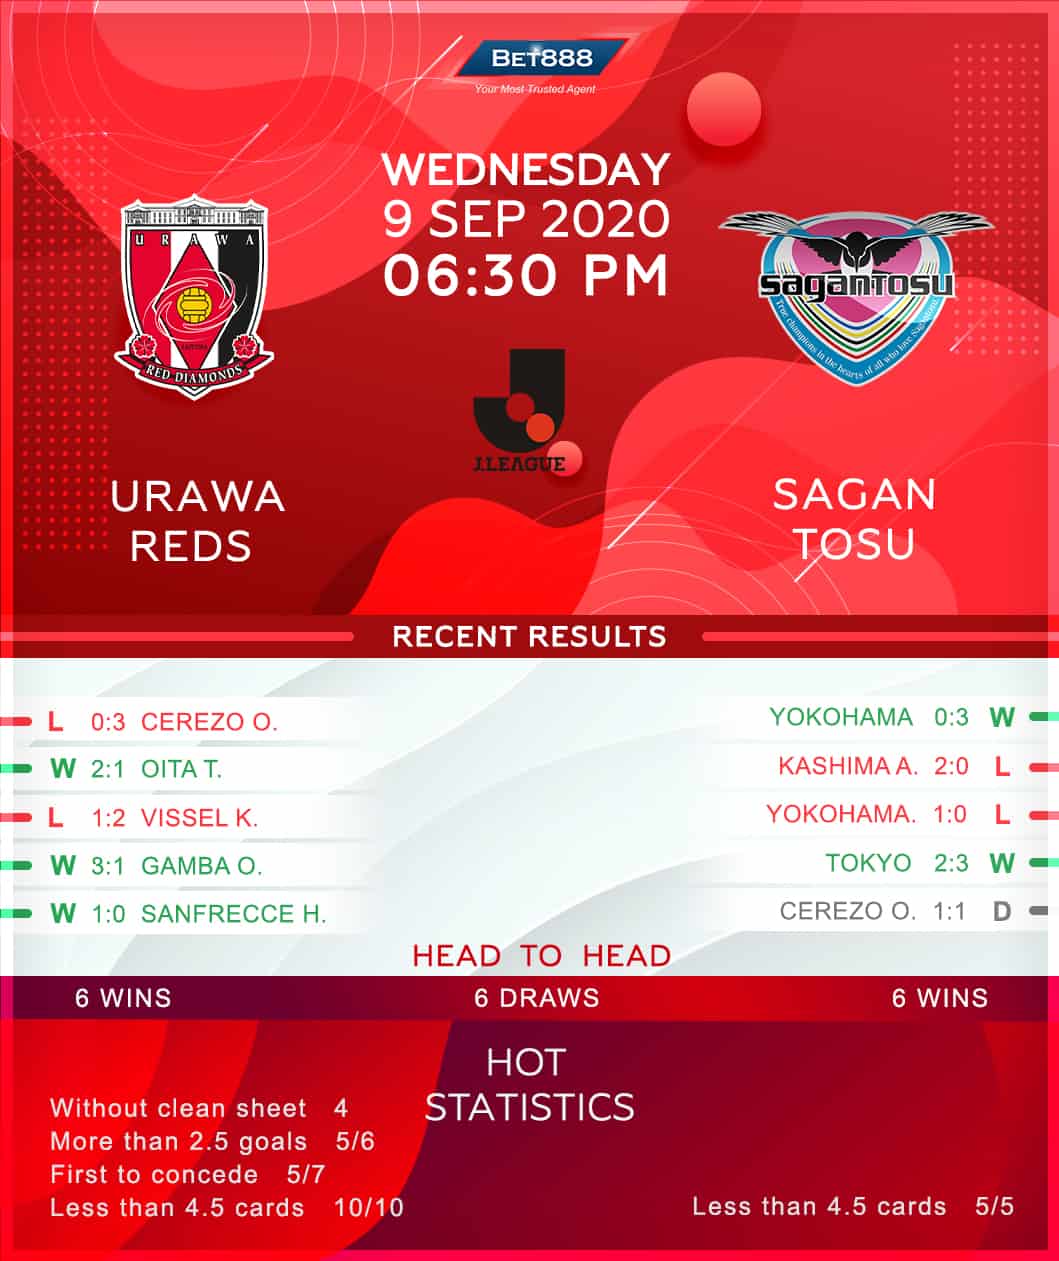 Urawa Reds vs Sagan Tosu﻿ 09/09/20